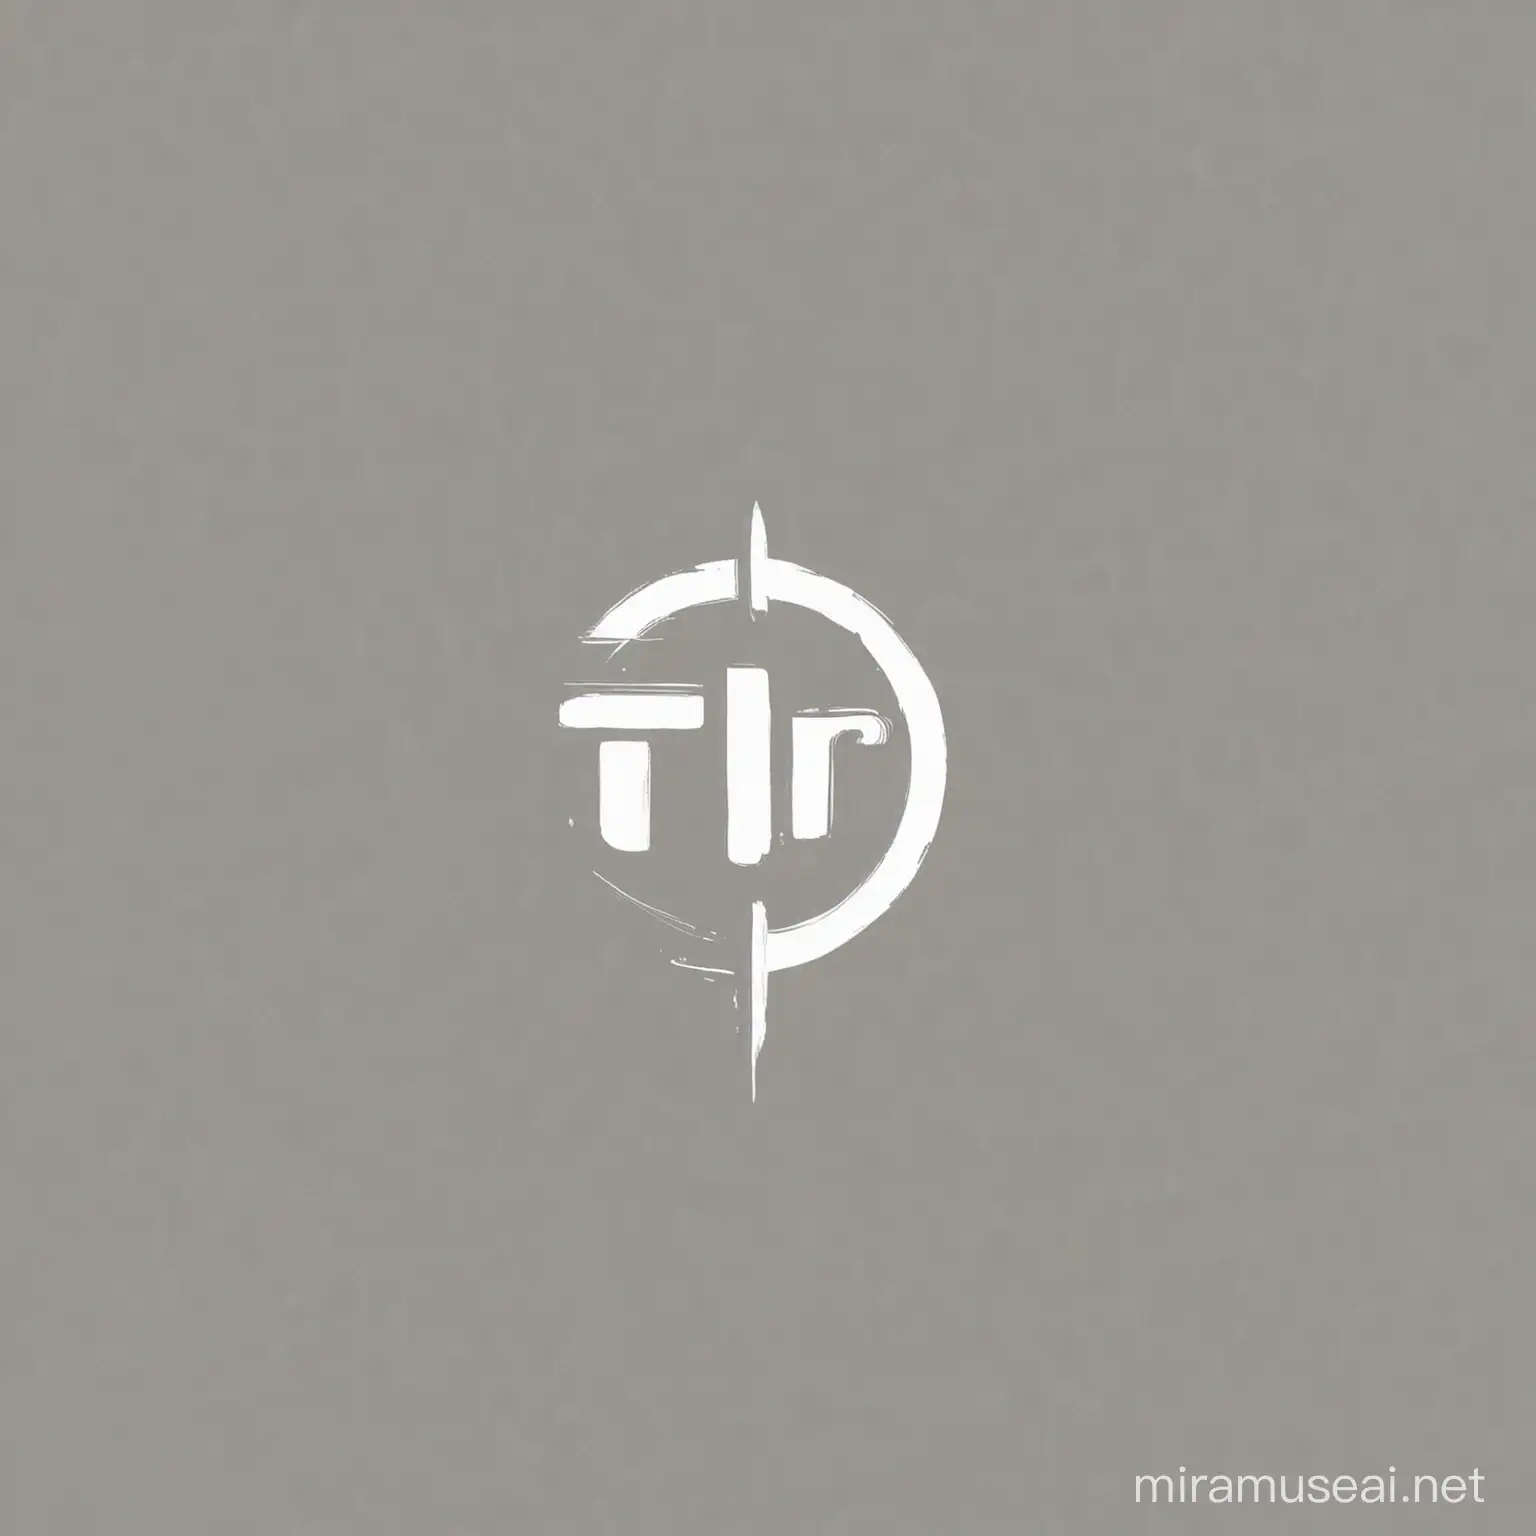 Simple and Elegant Logo Design for Tiran Company